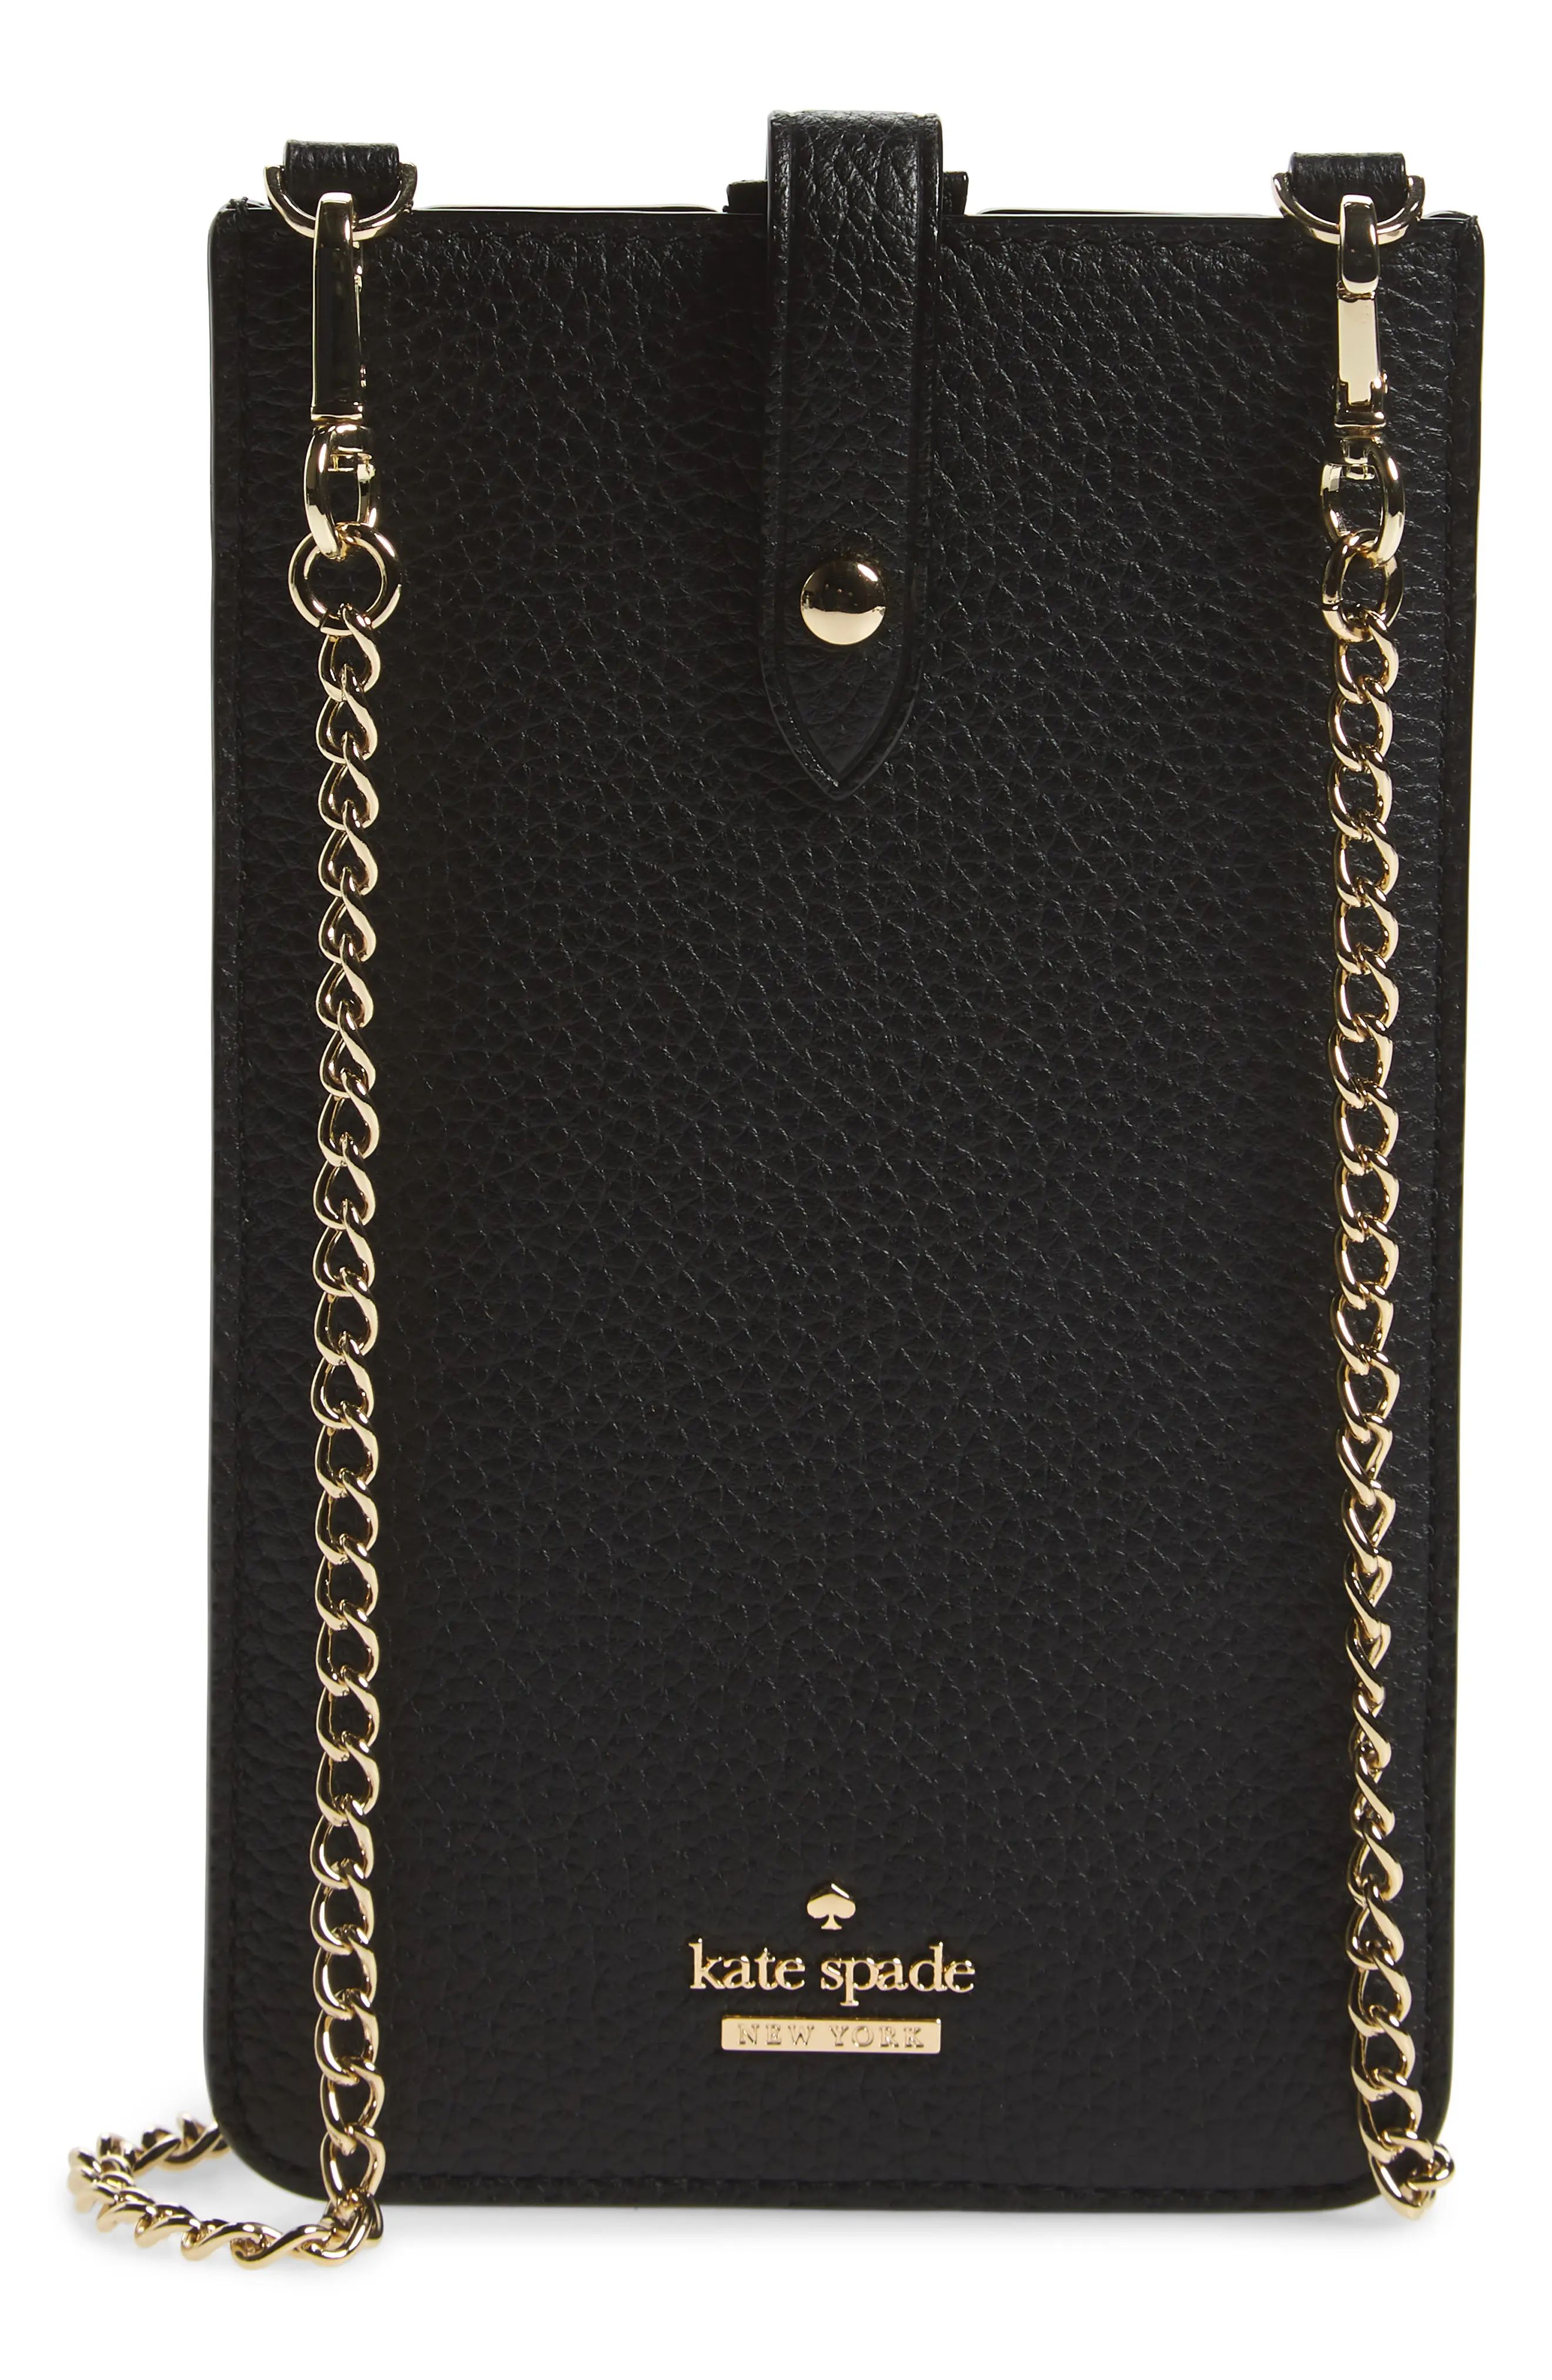 kate spade new york pebbled leather phone crossbody bag | Nordstrom